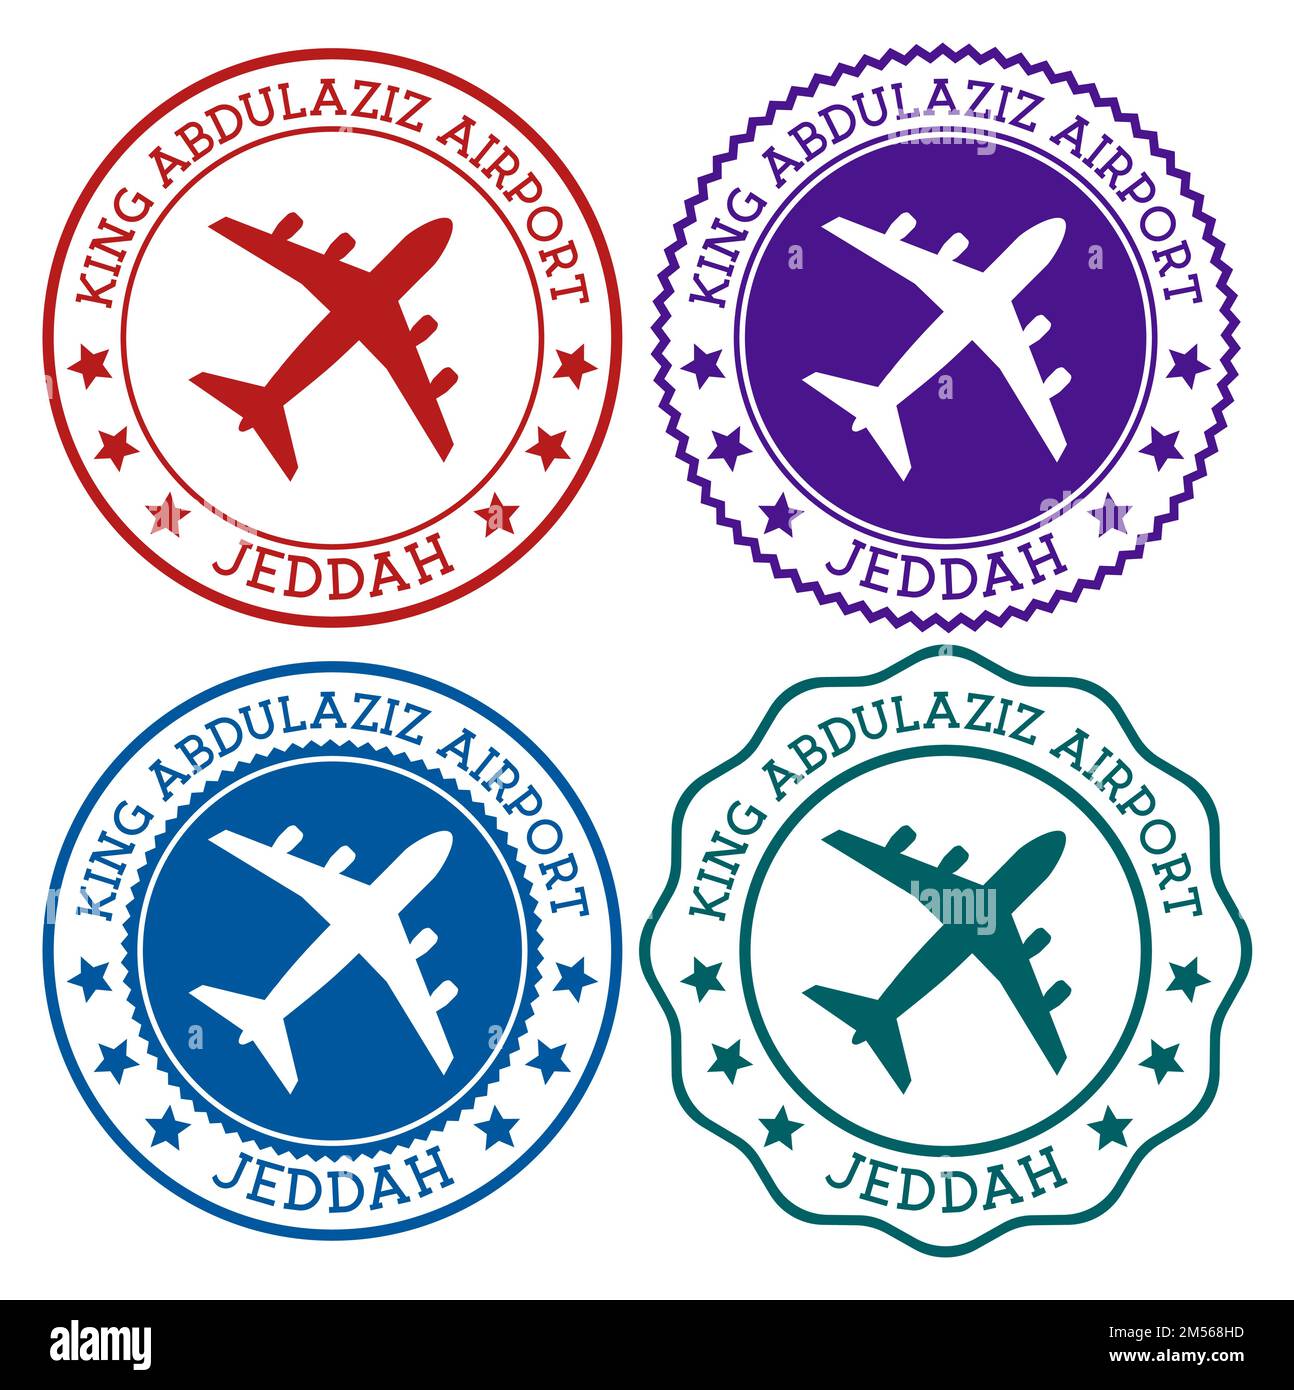 King Abdulaziz Airport Jeddah. Jeddah airport logo. Flat stamps in material color palette. Vector illustration. Stock Vector